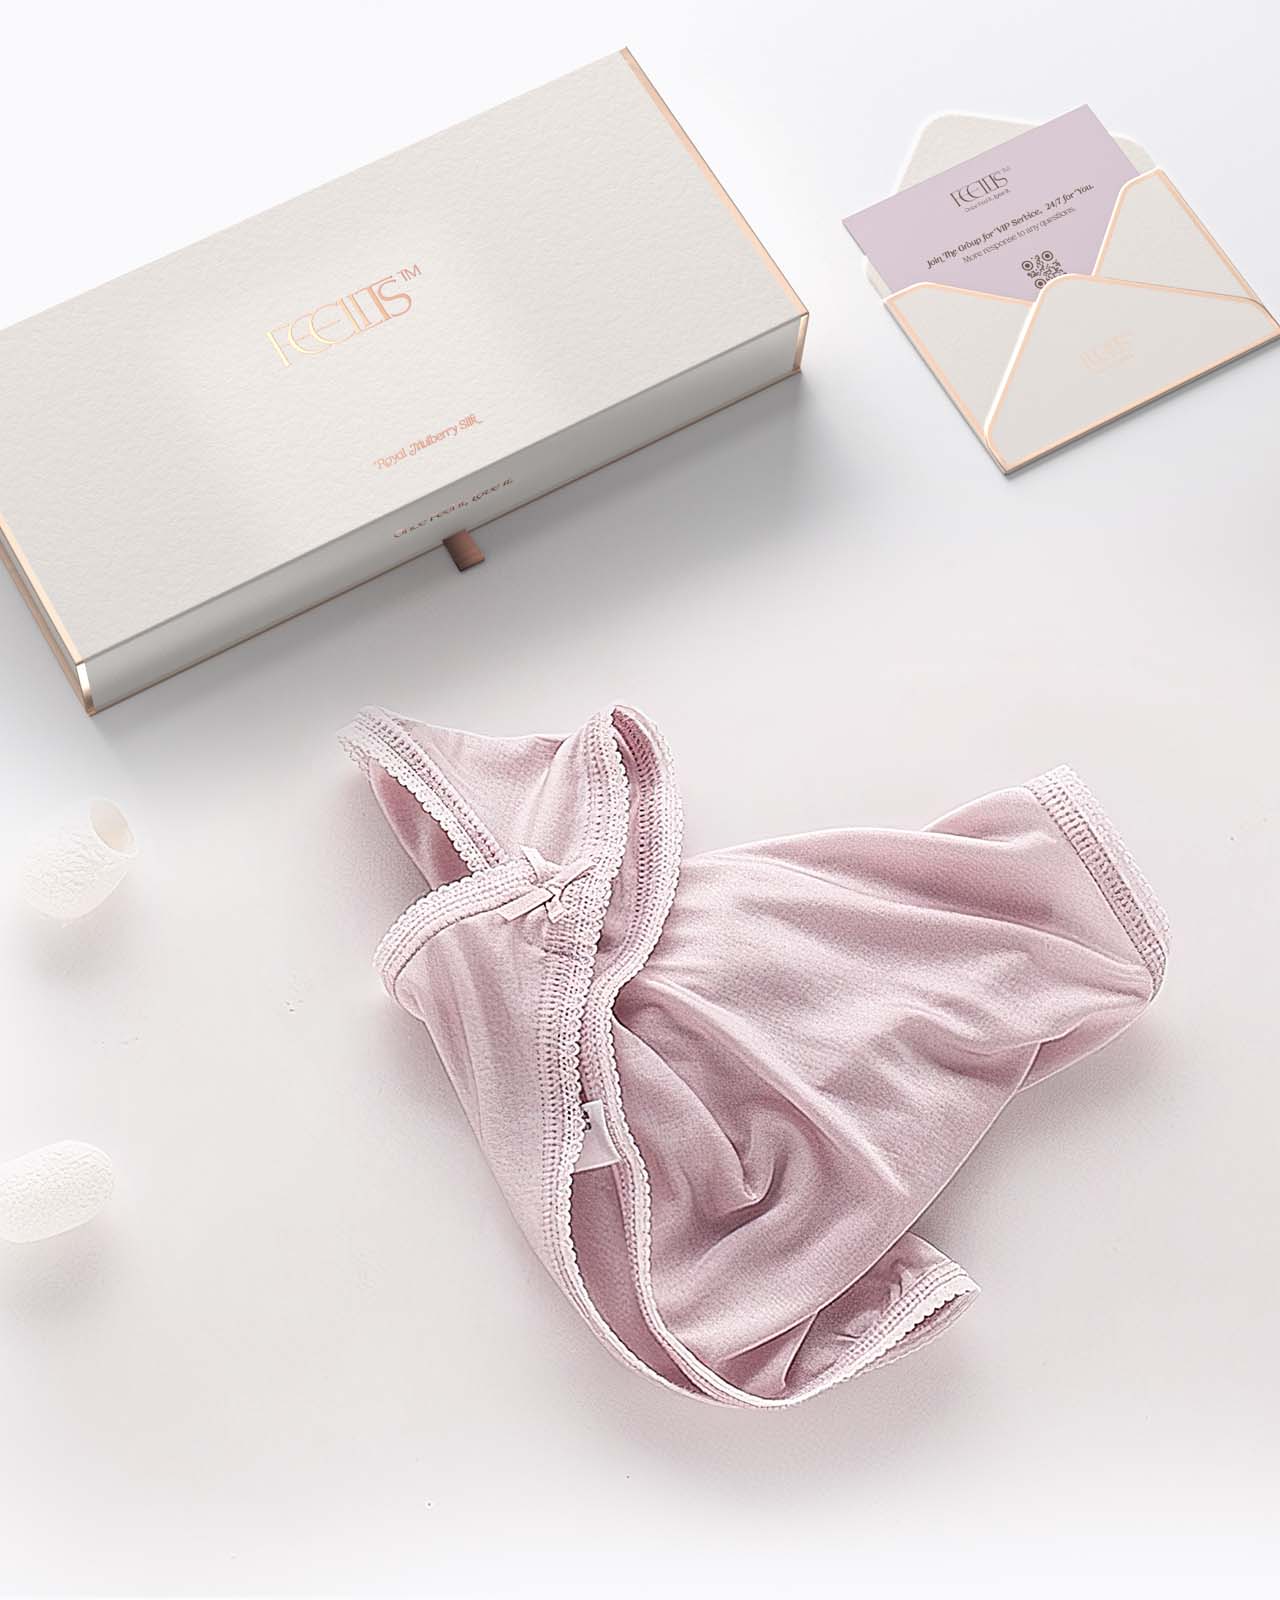 ROSEWARD 100% Mulberry Silk Underwear for Women 19 Momme Pure Silk